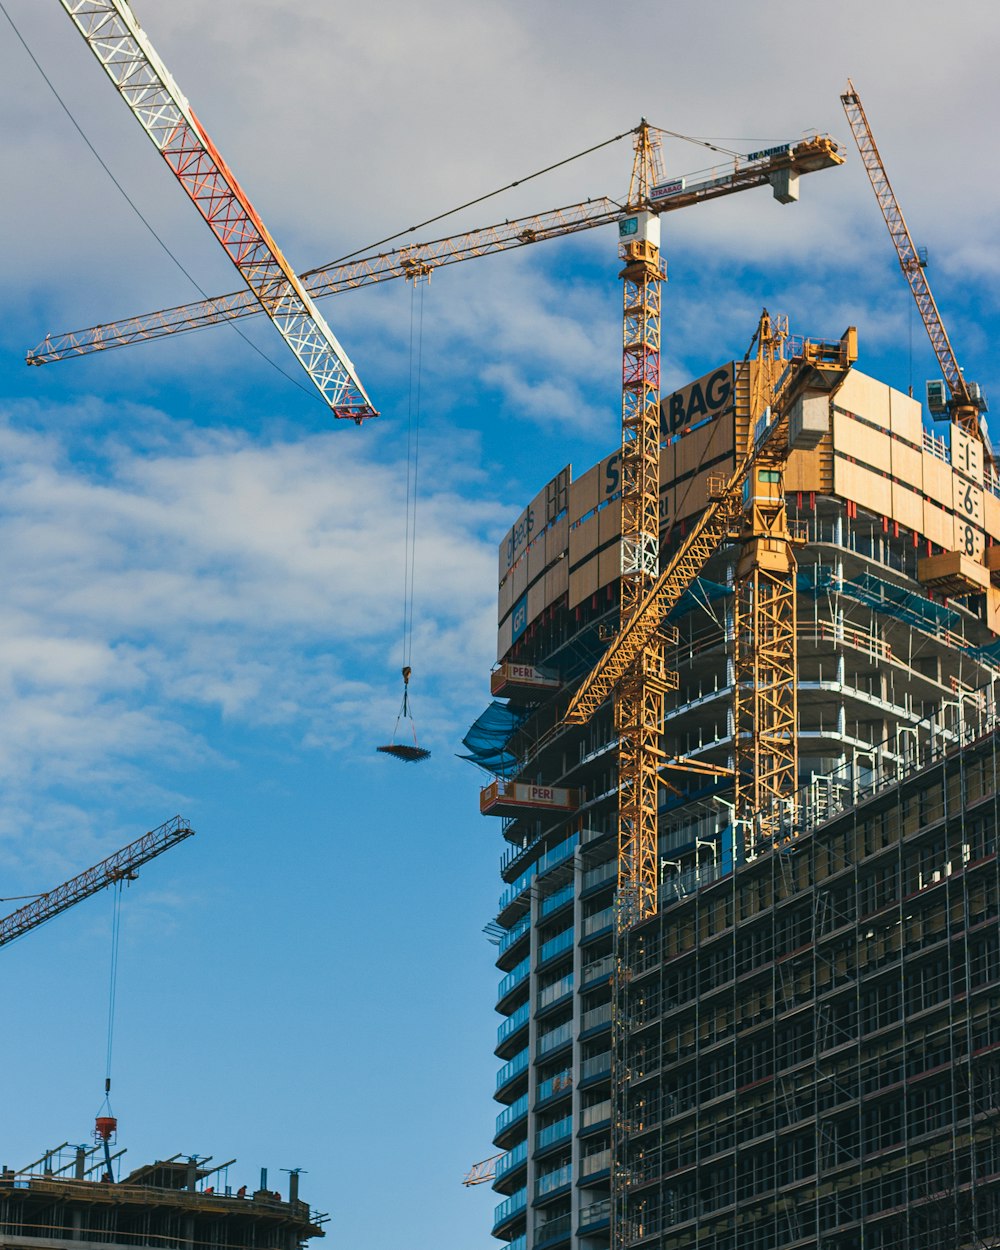 a large building under construction next to a crane